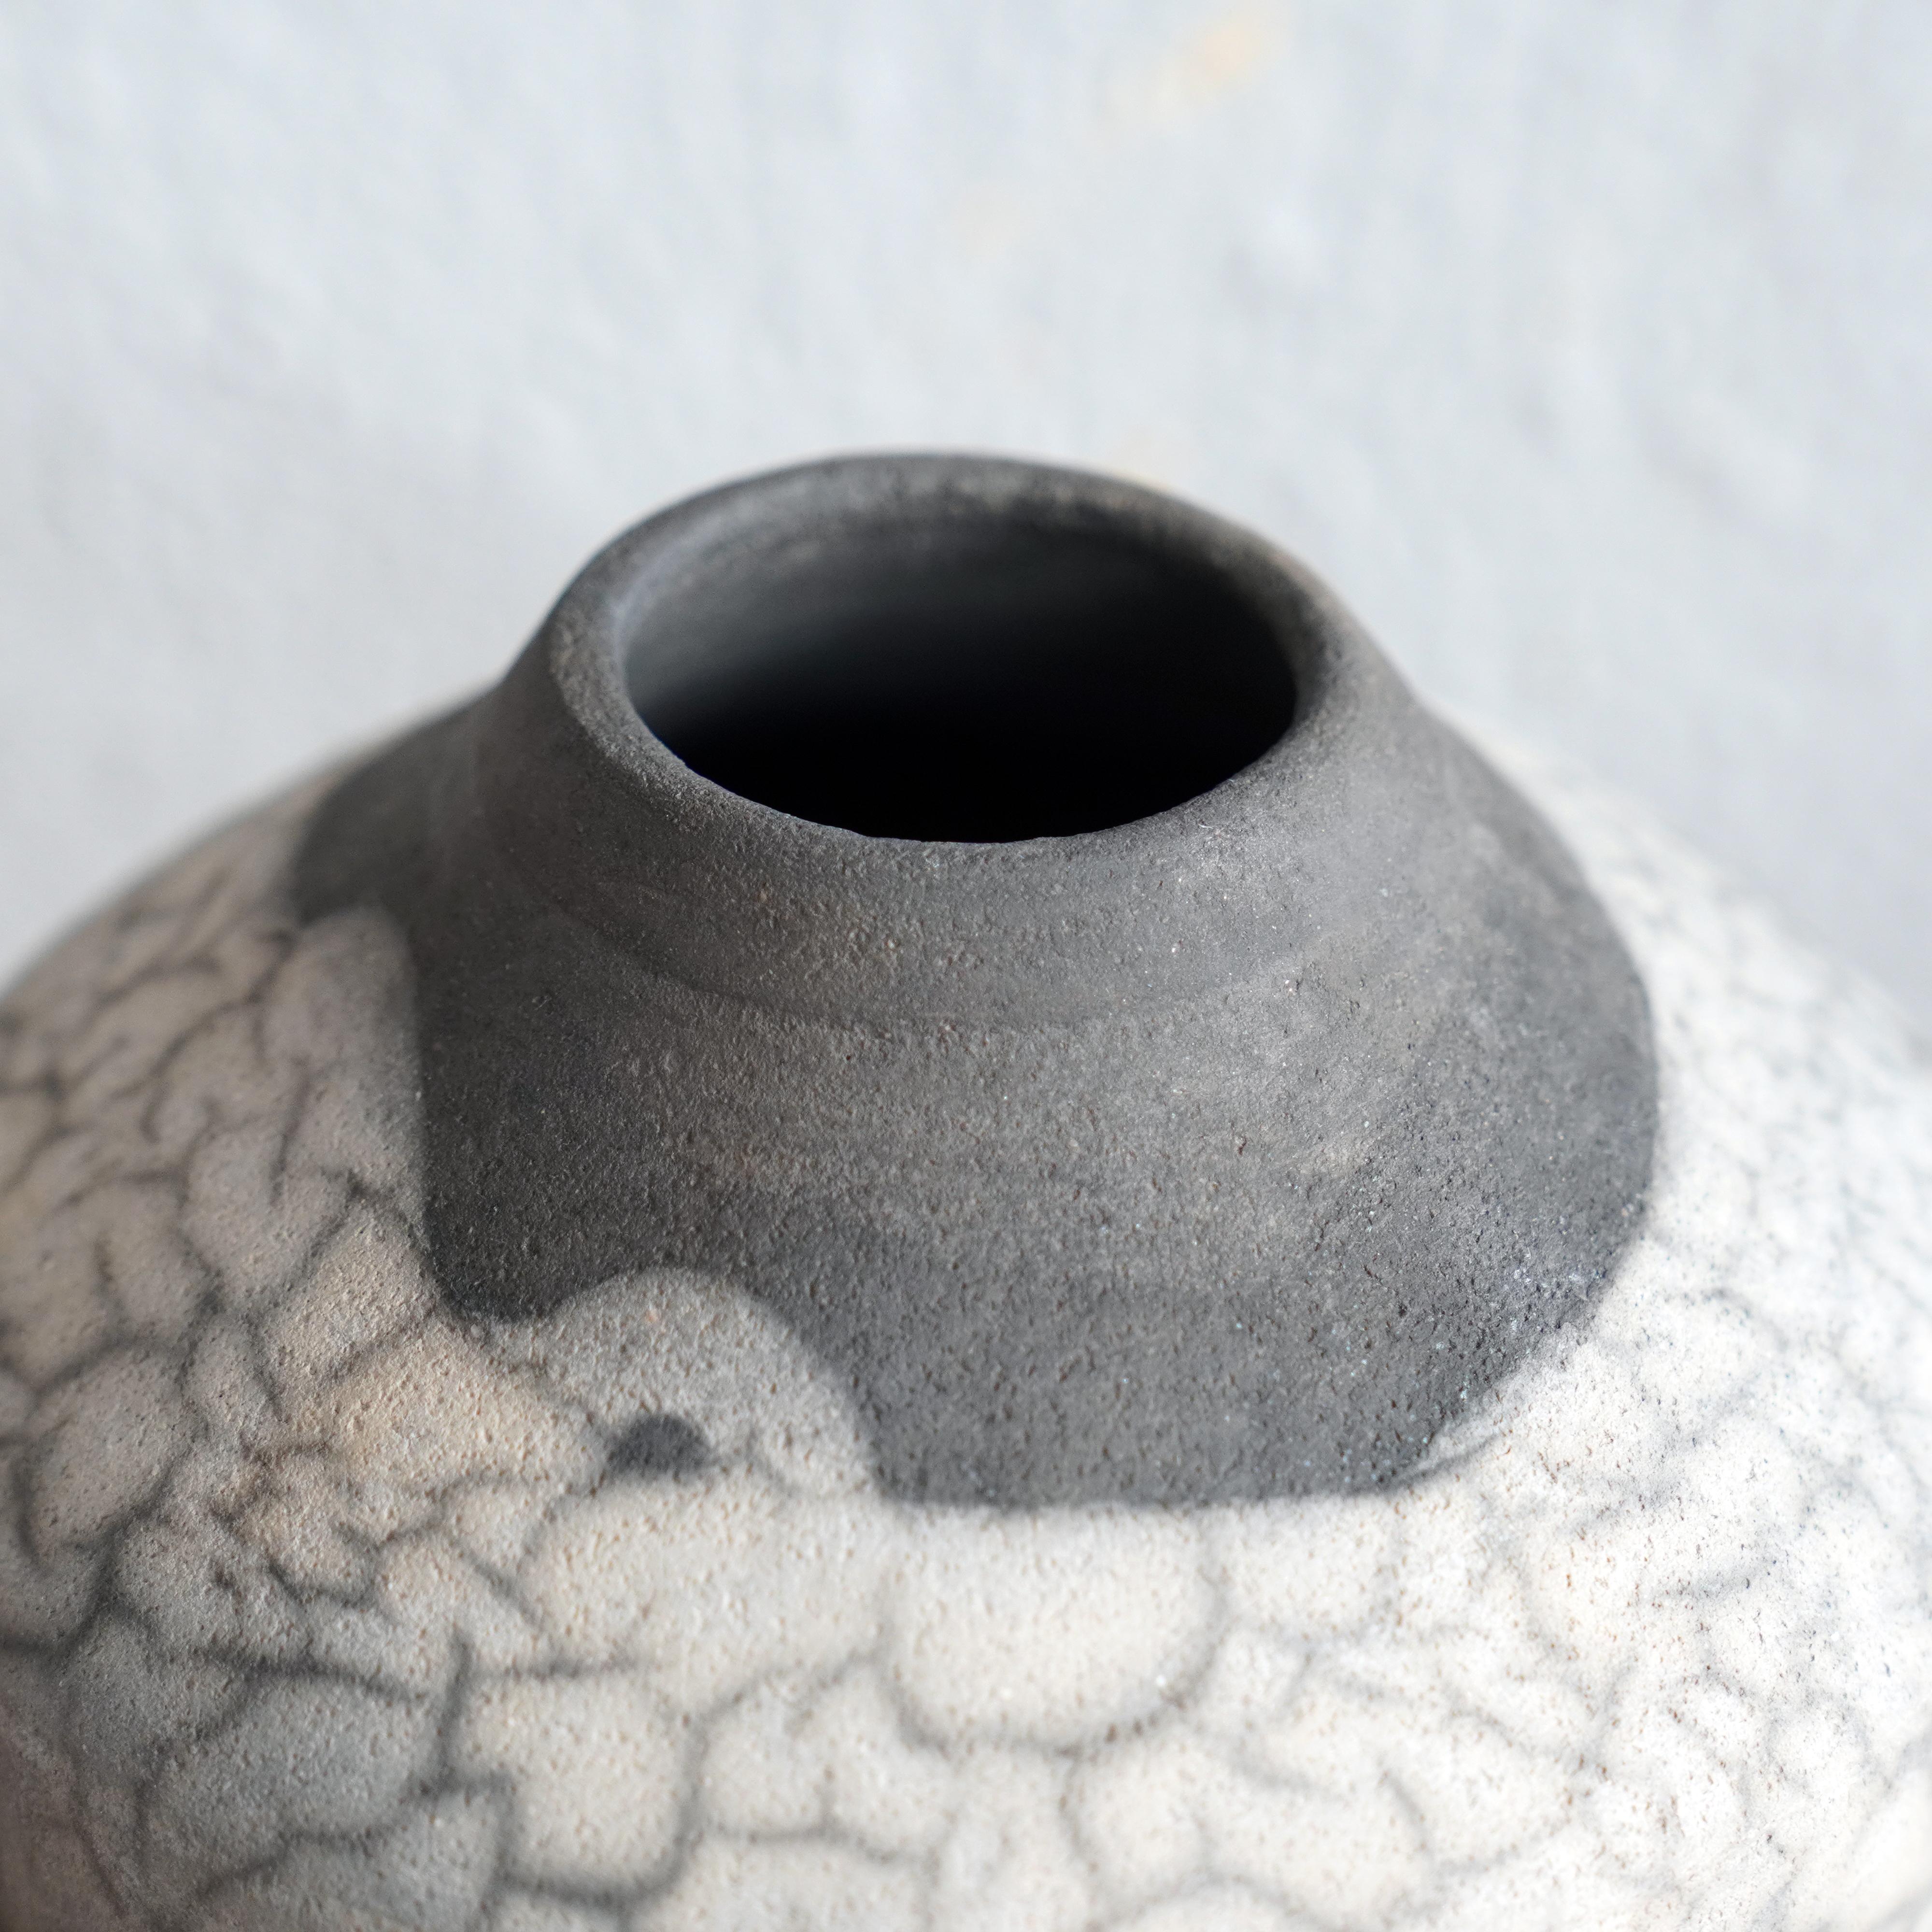 Modern Raaquu Inaka Raku Pottery Vase - Smoked Raku - Handmade Ceramic, Malaysia For Sale